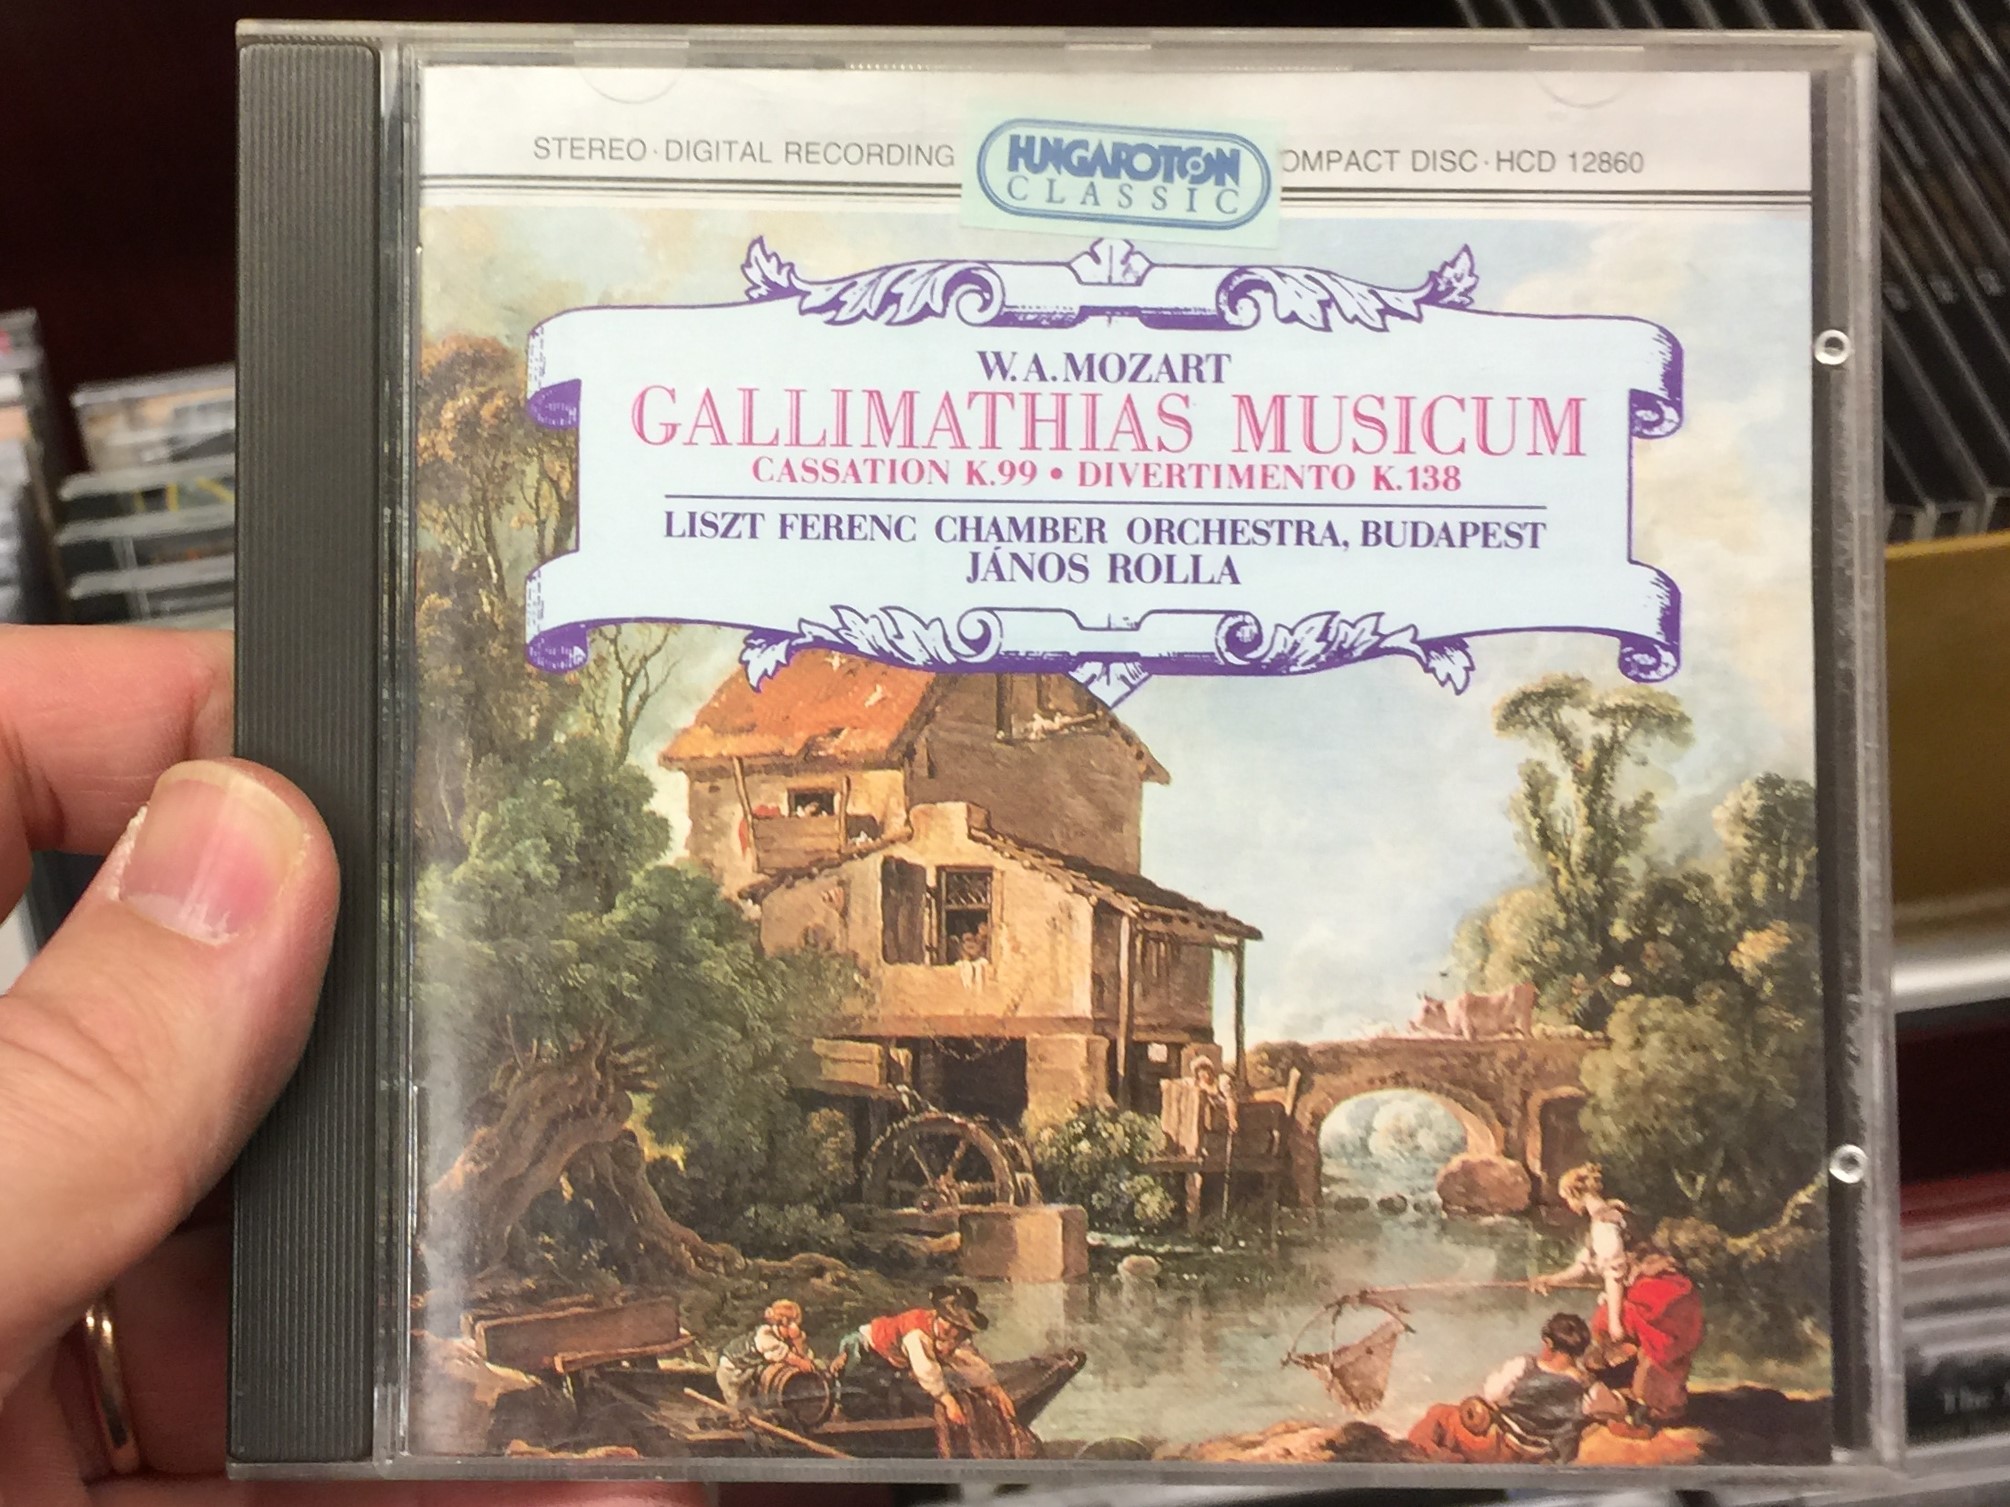 w.-a.-mozart-gallimathias-musicum-cassation-k.99-divertimento-k.-138-liszt-ferenc-chamber-orchestra-budapest-j-nos-rolla-hungaroton-classic-audio-cd-1987-stereo-hcd-12860-1-.jpg